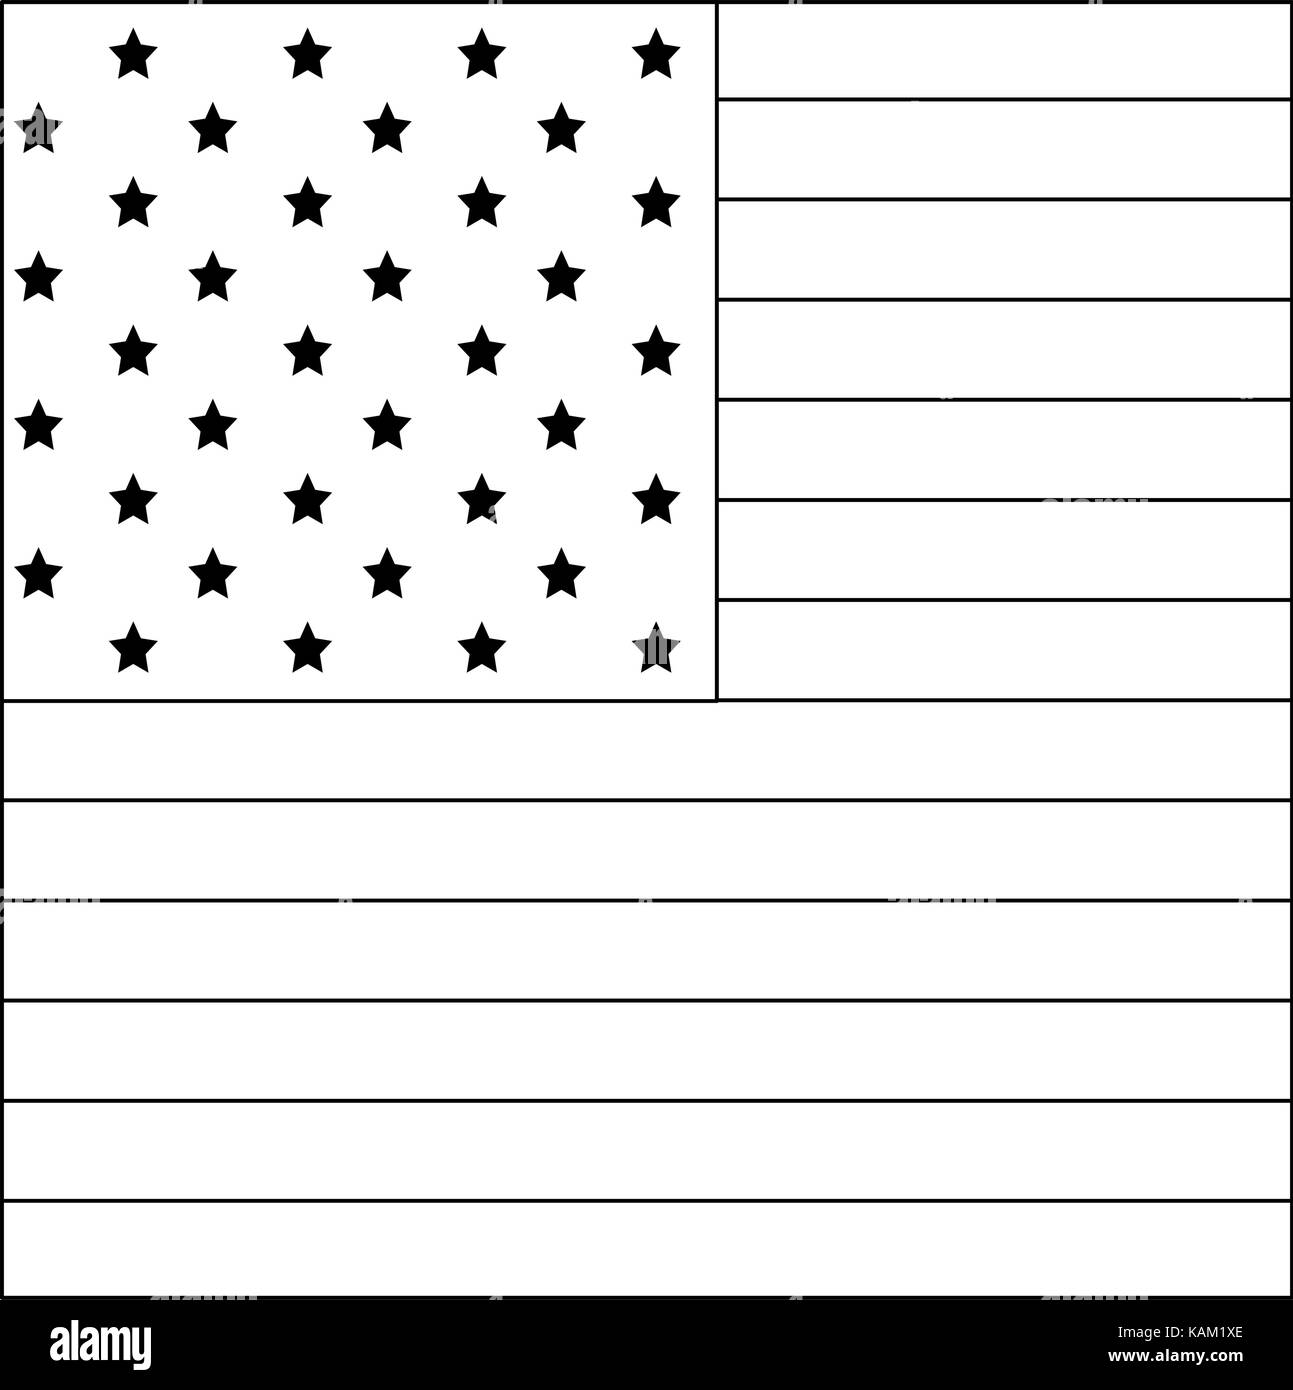 United States Flag Black and White Stock Photos & Images - Alamy